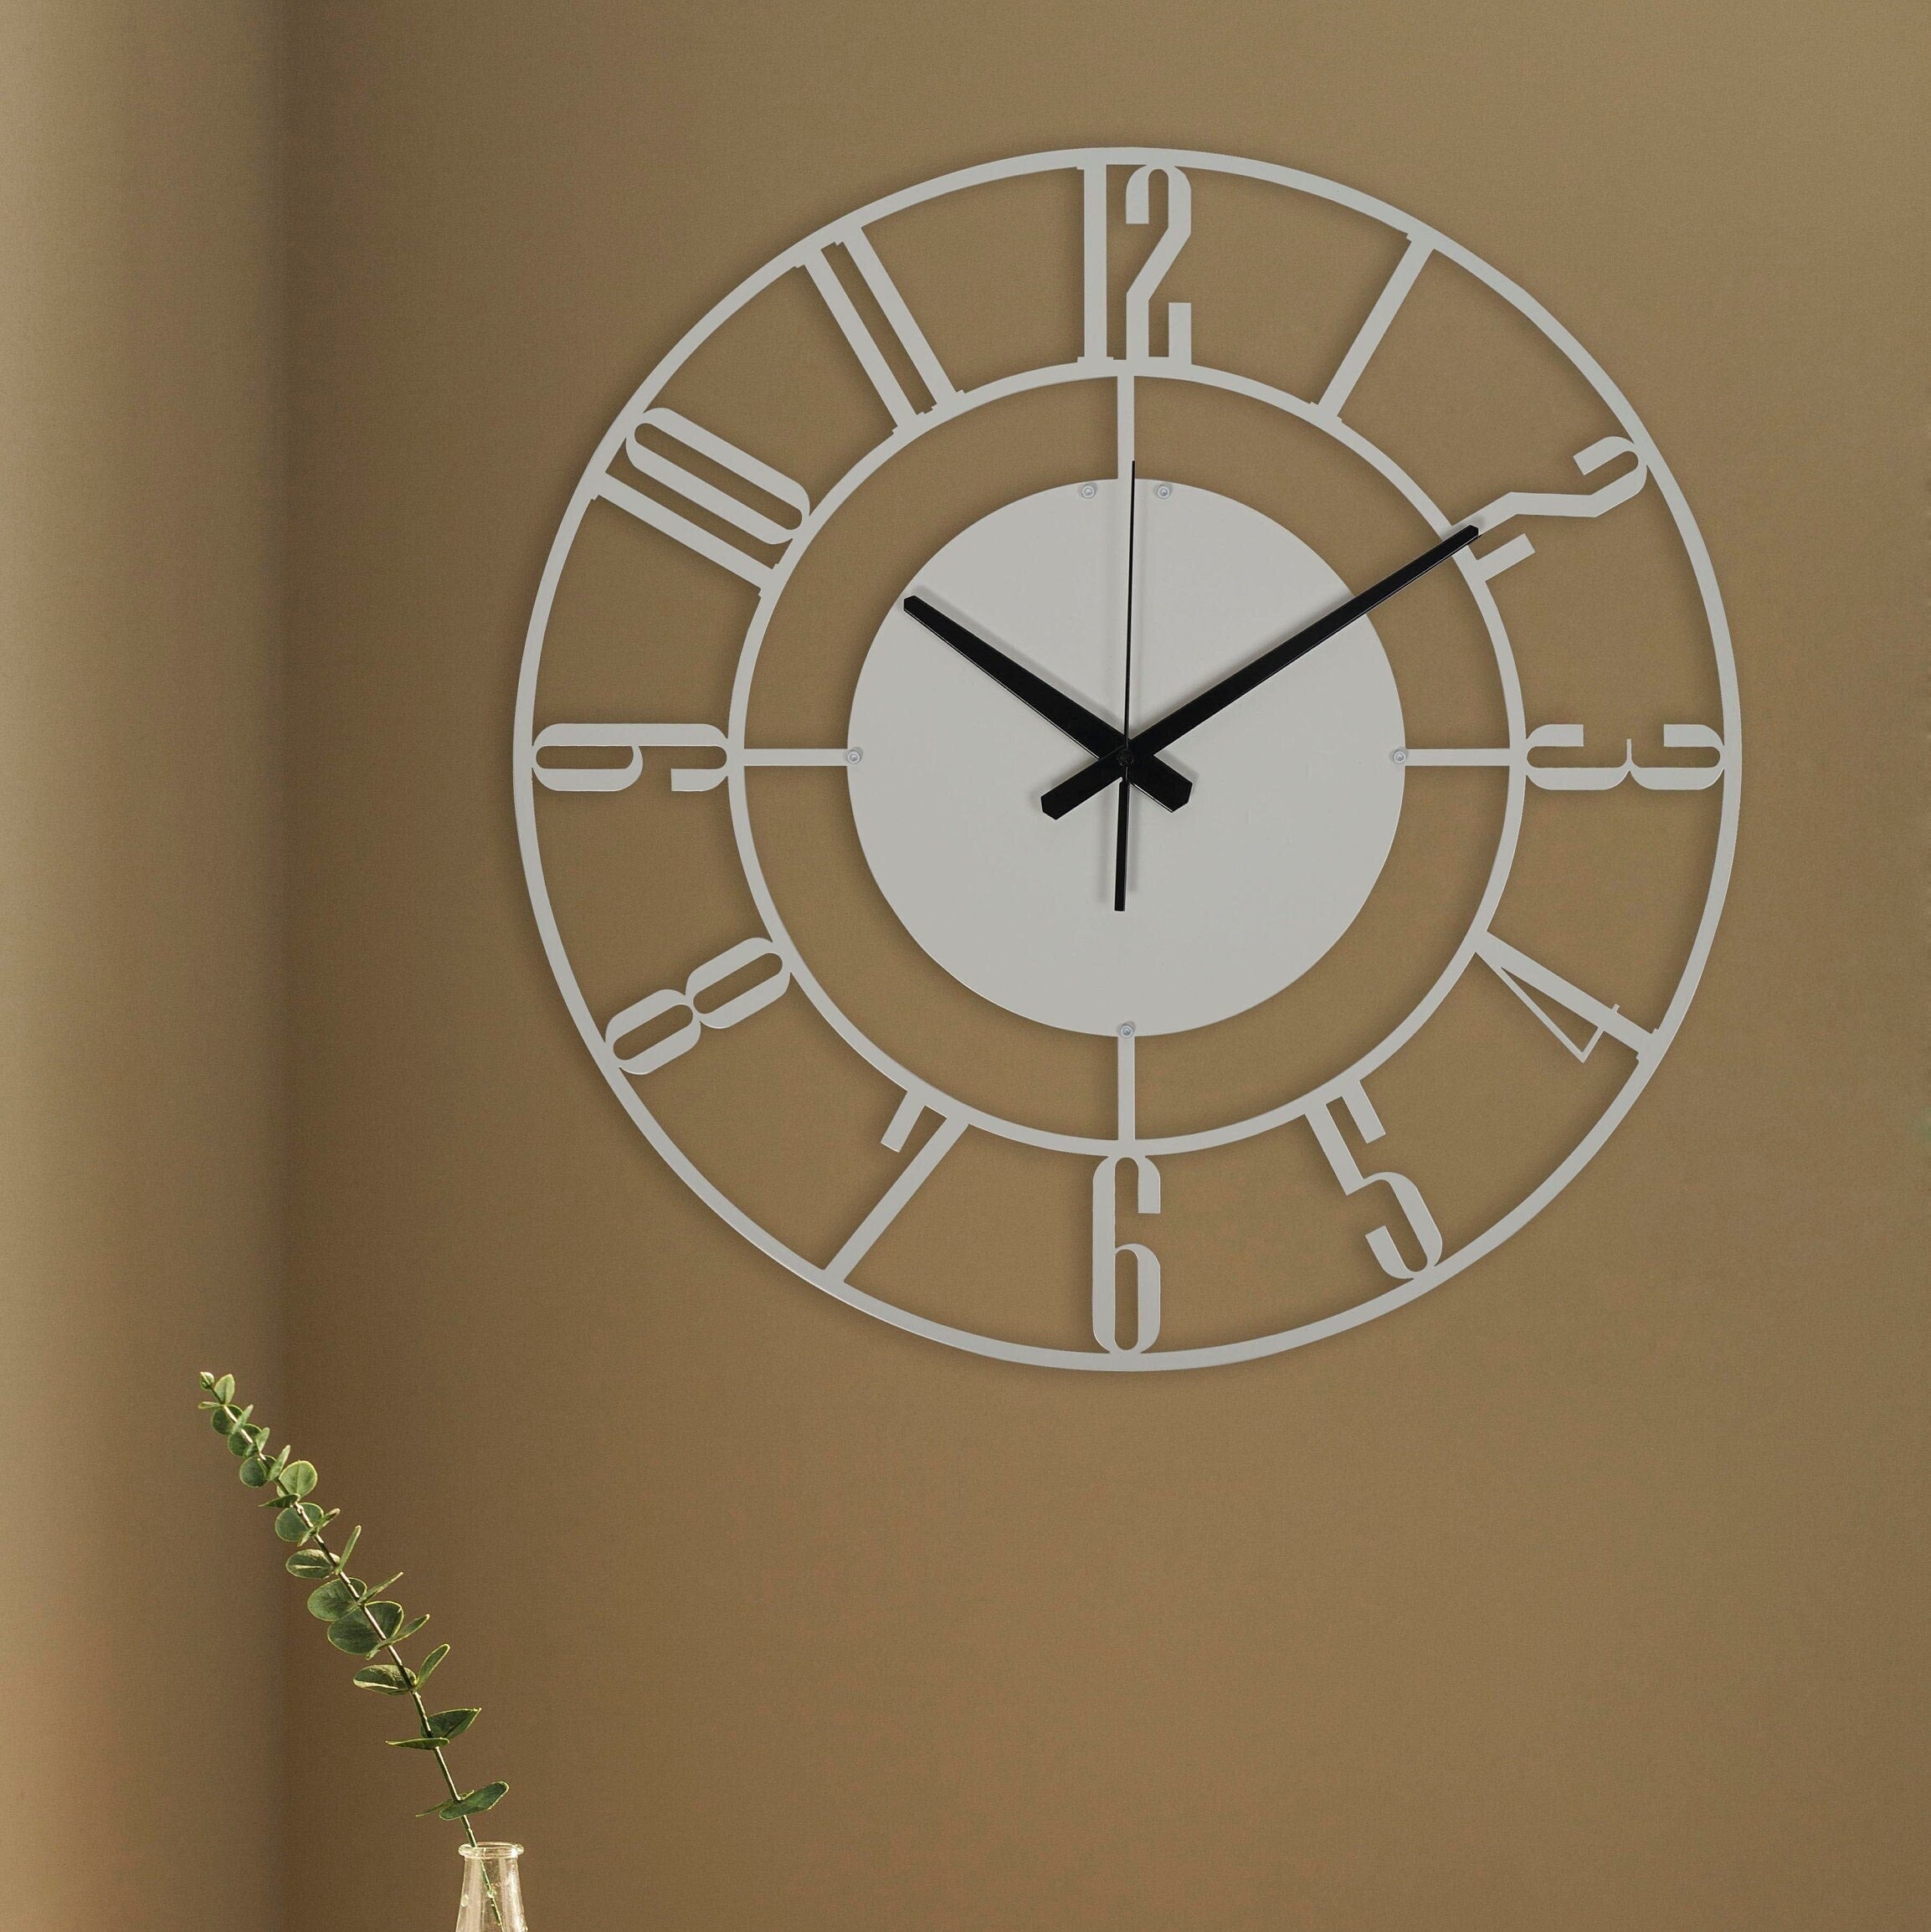 Silver Clock, Modern Wall Clock, Silent Wall Clock, Metal Wall Clocks, Unique Wall Clock With Numbers, Decorative Clock, Laser Cut Clock